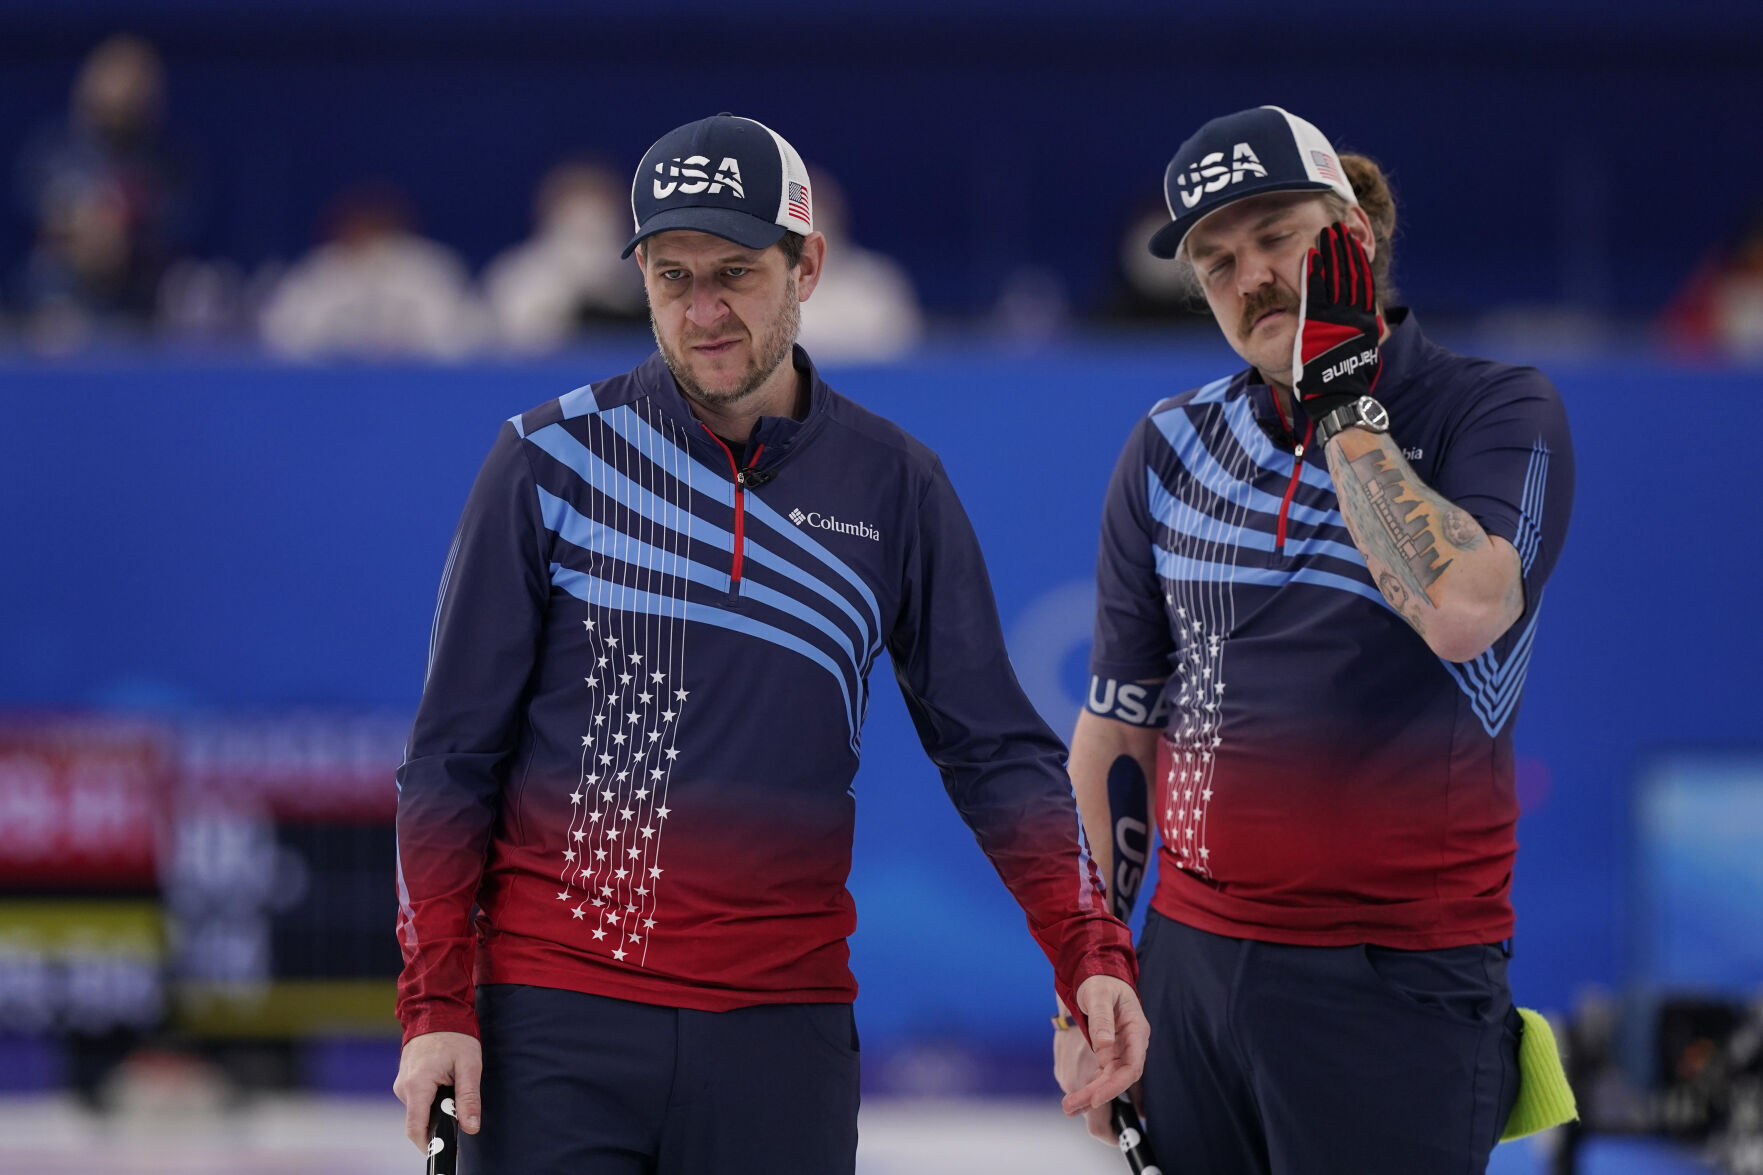 Matt Hamilton, Team USA mens curling team digs early hole, falls to Canada